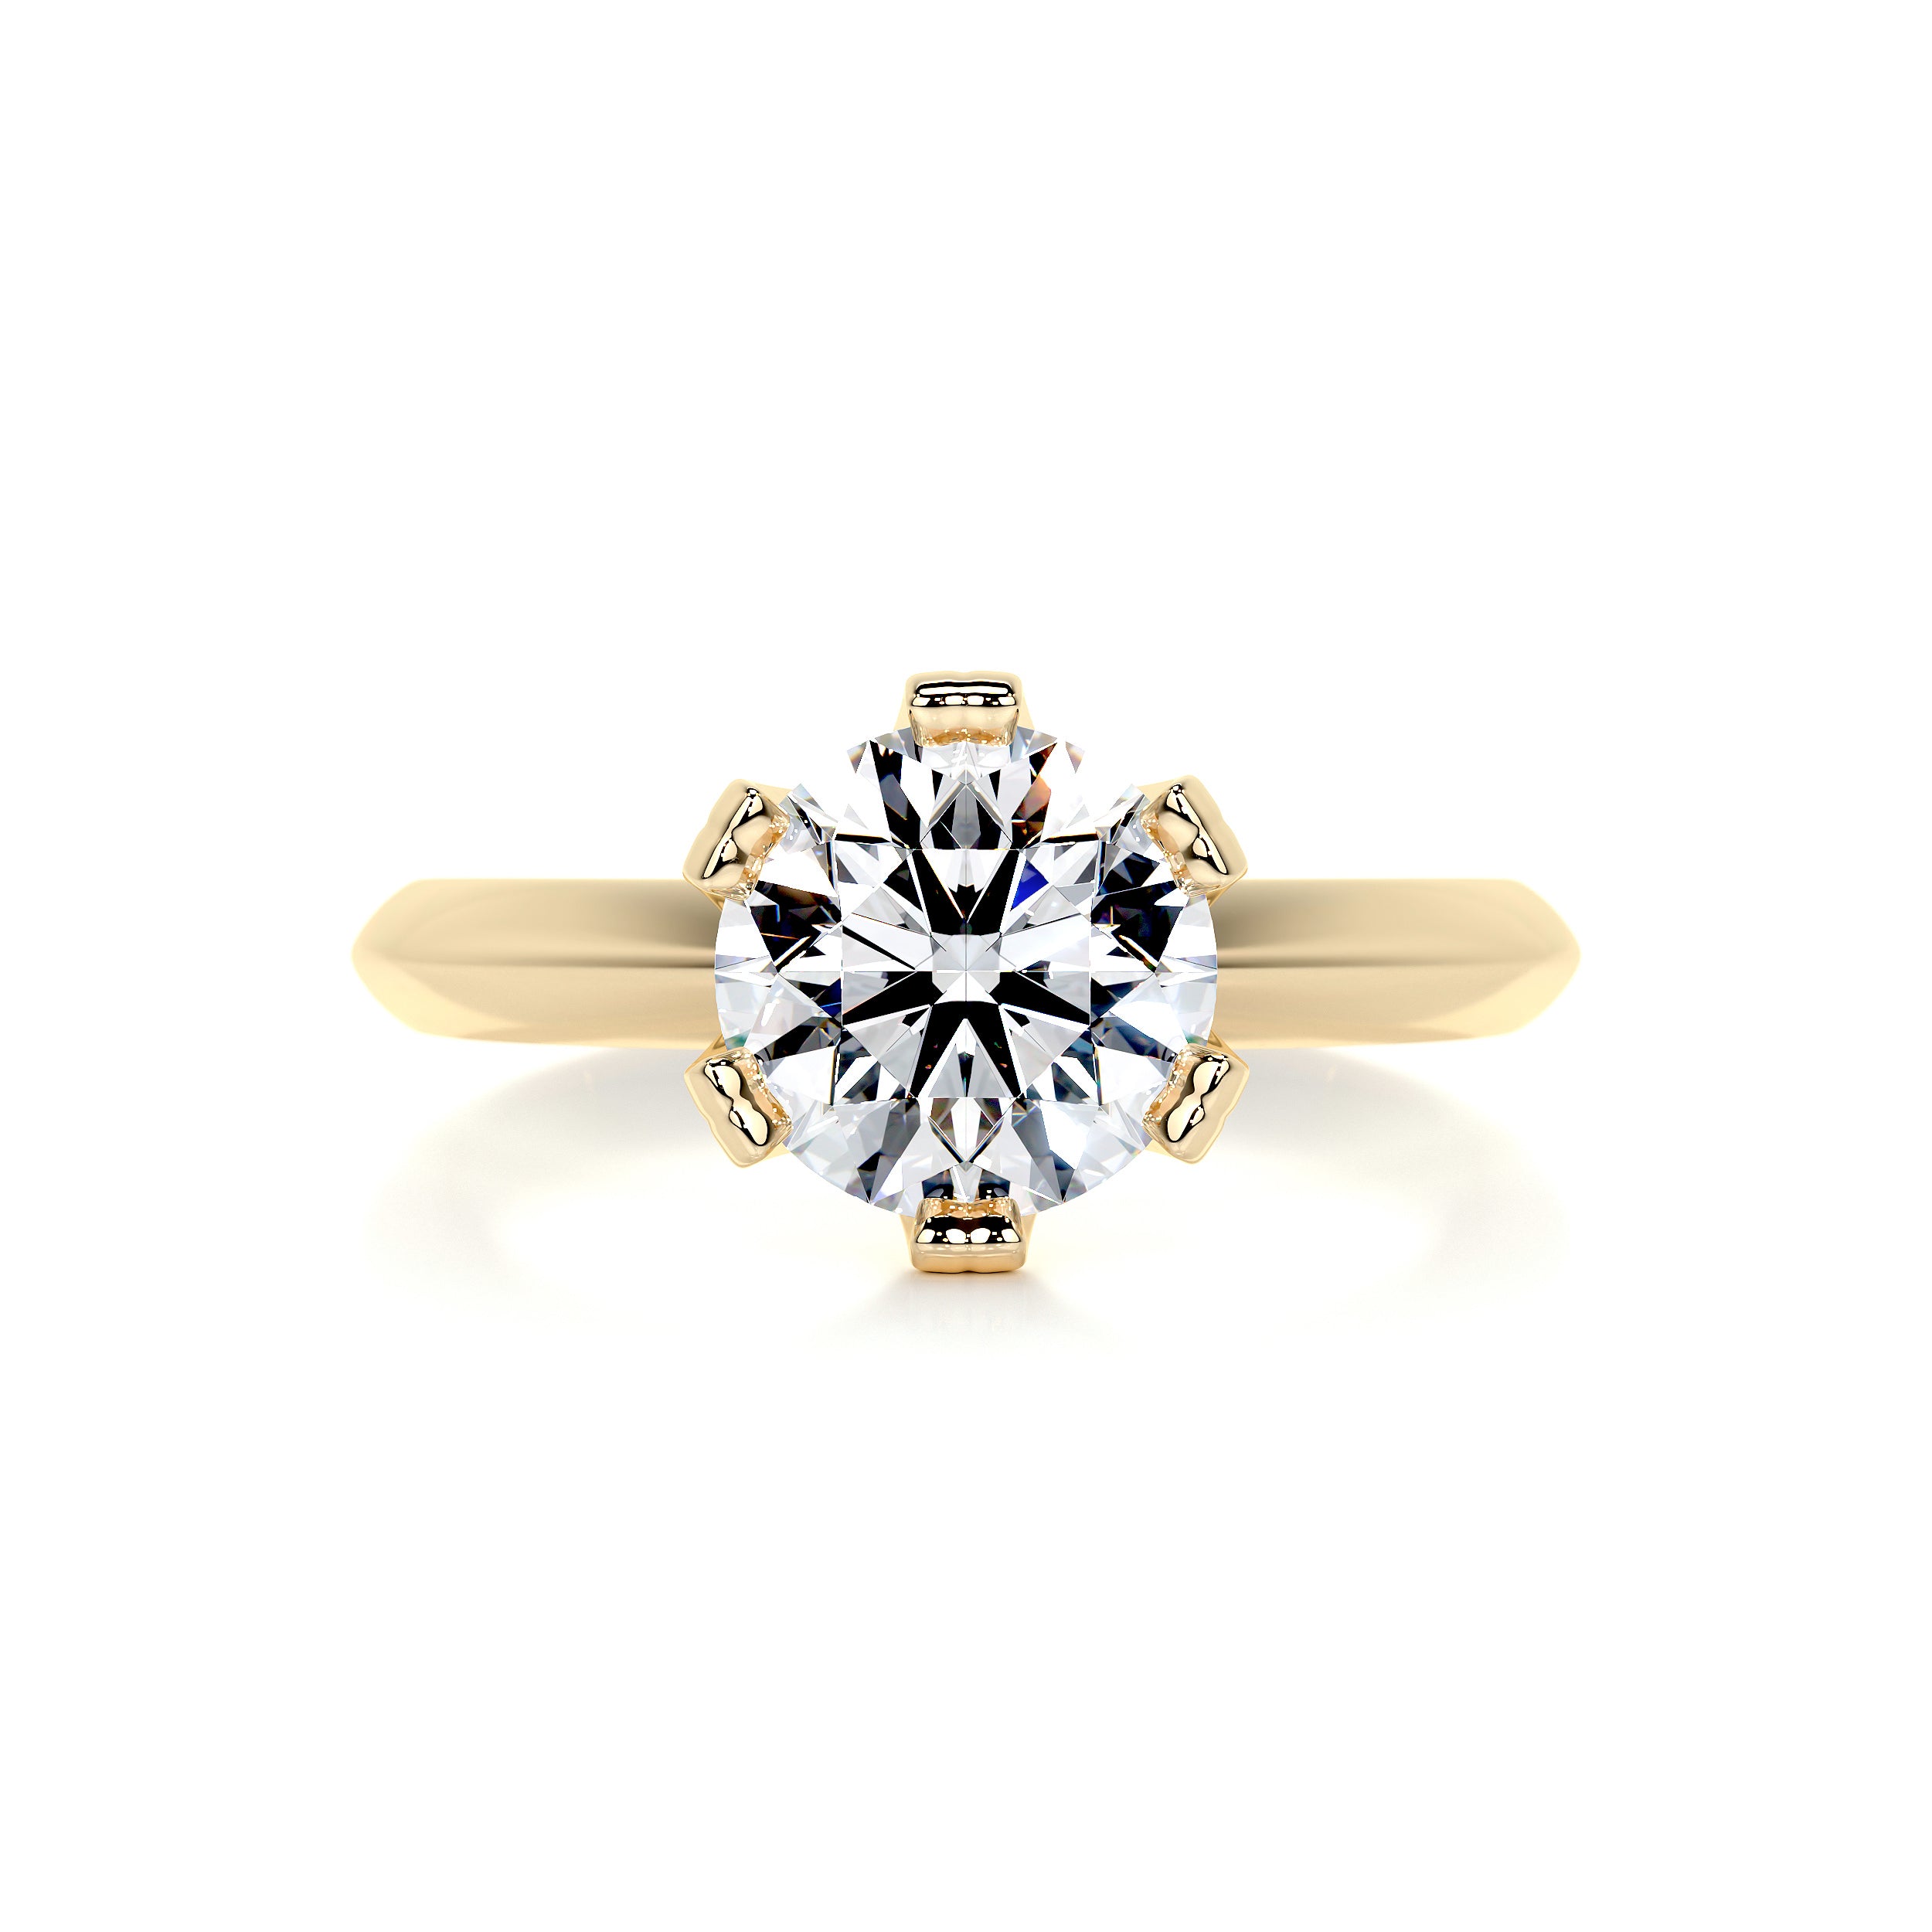 Alexis Diamond Engagement Ring   (1.5 Carat) -18K Yellow Gold